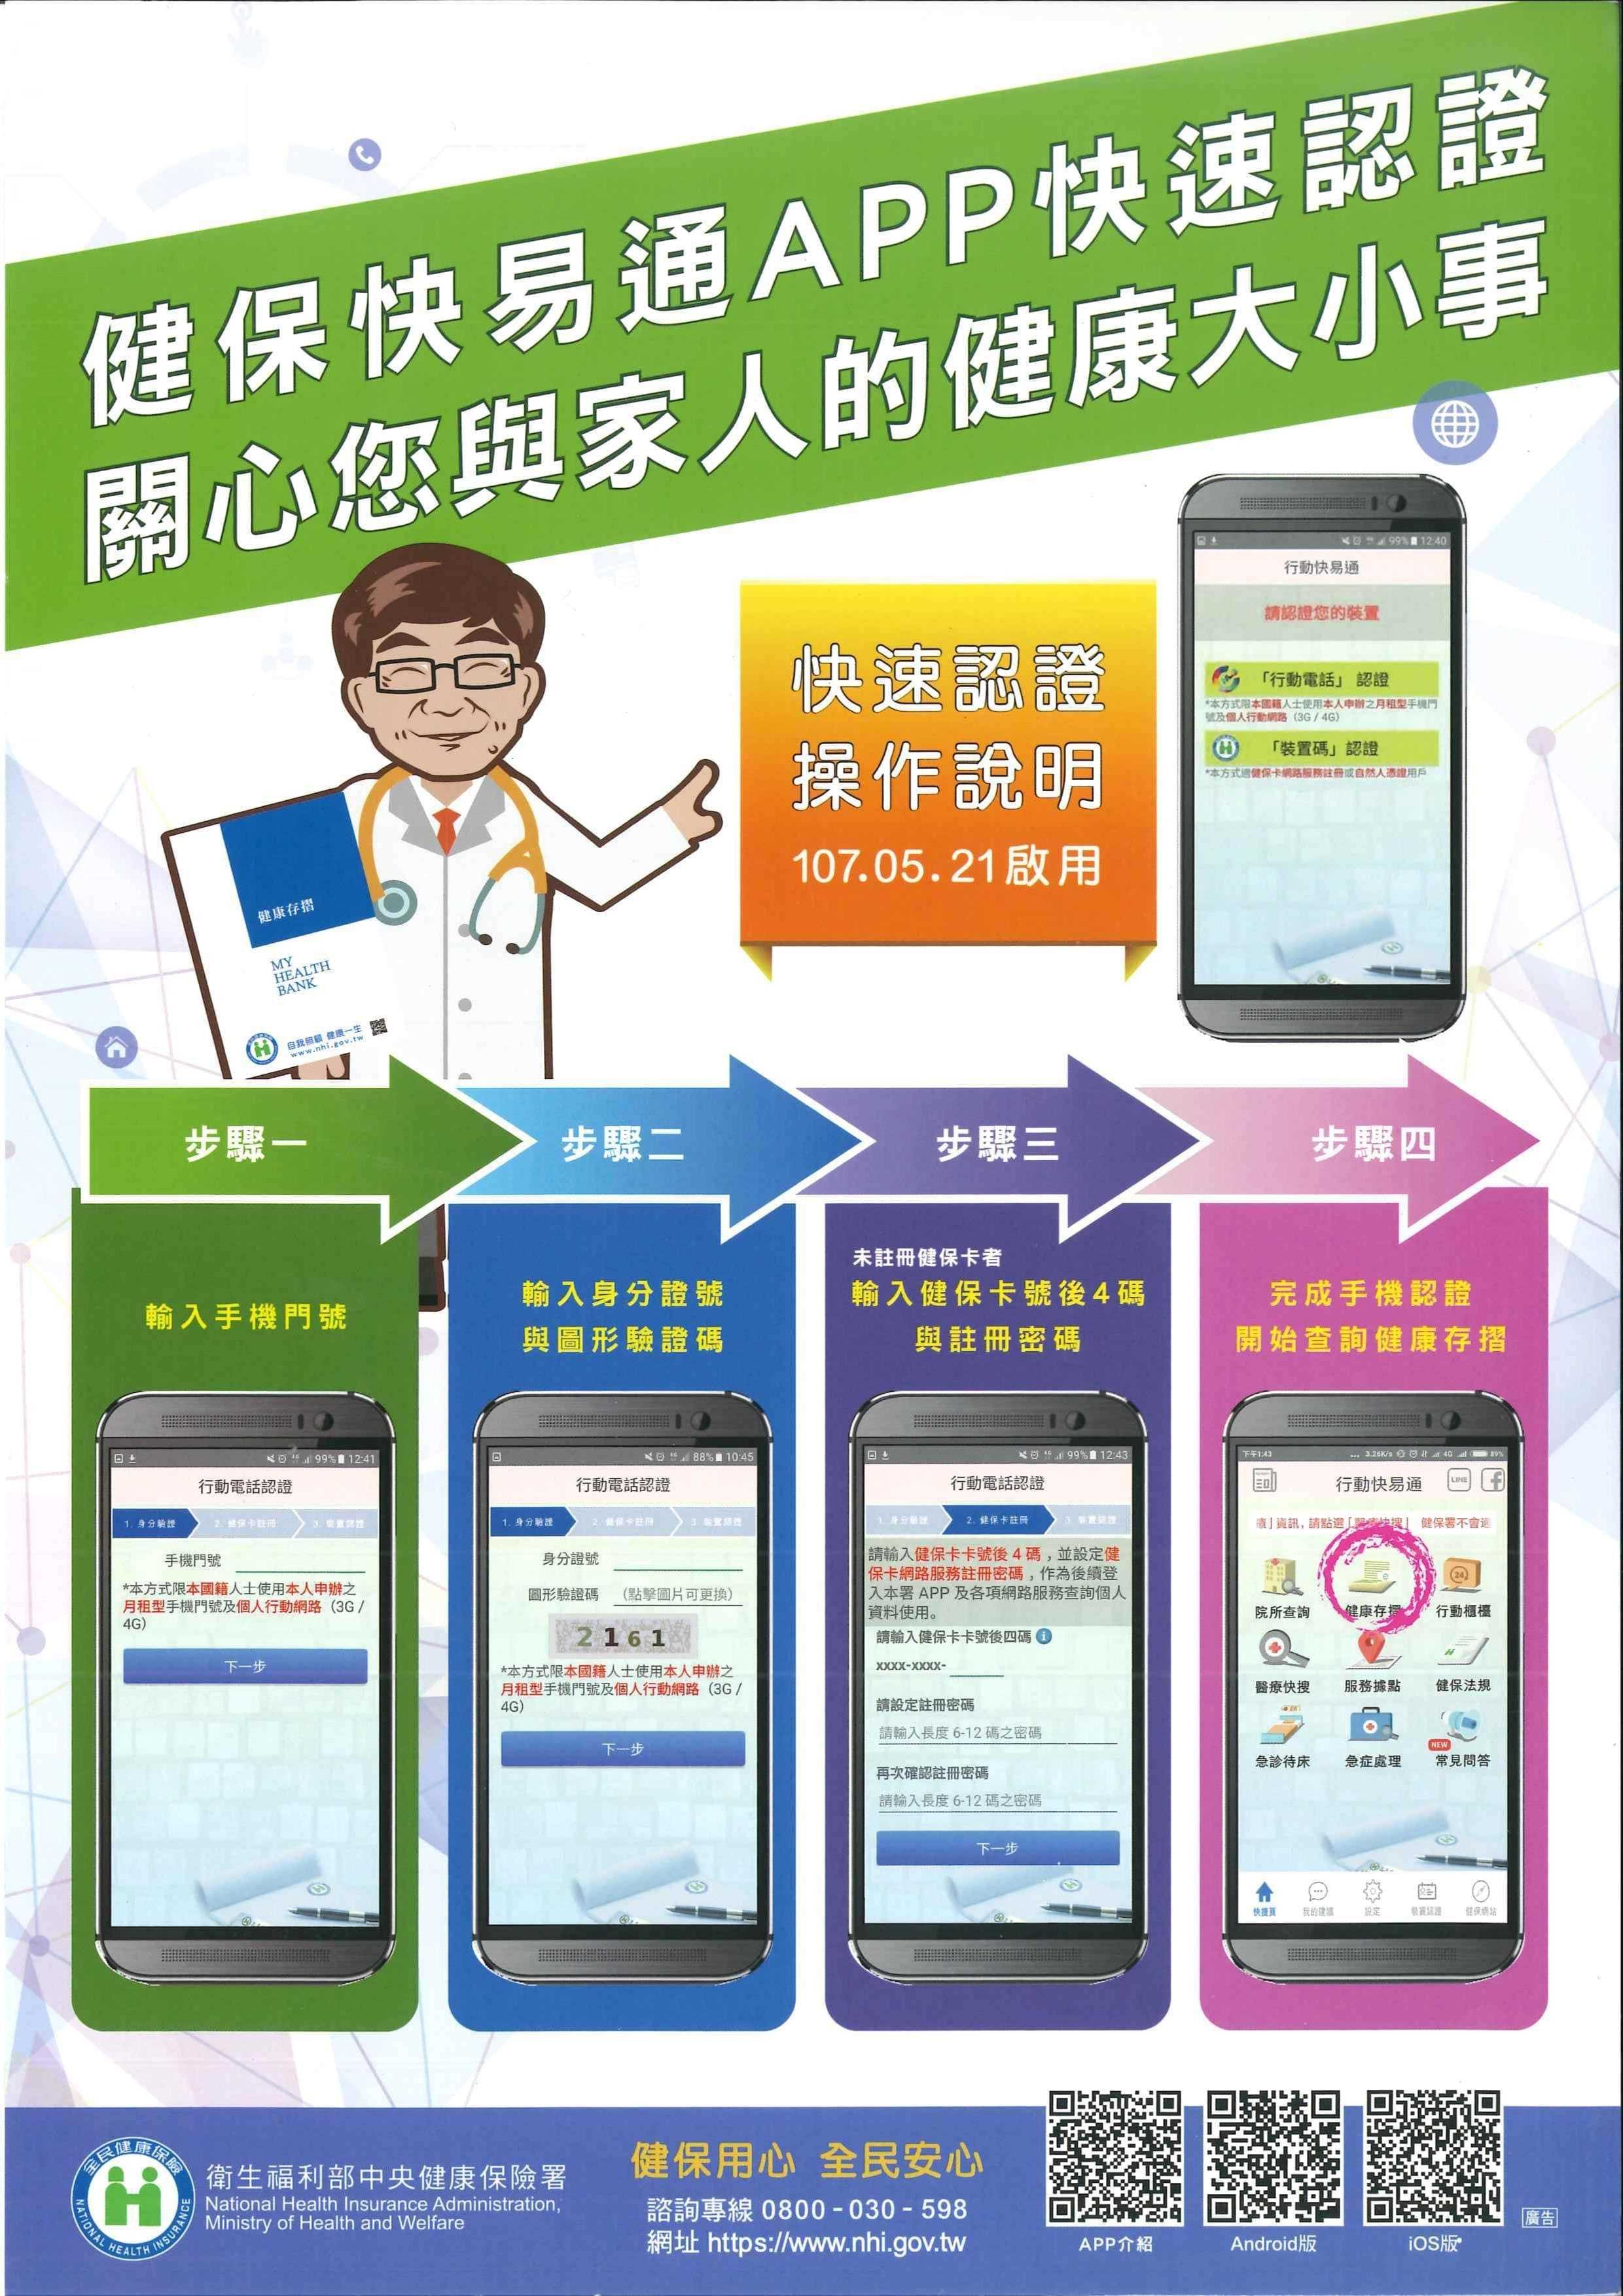 proimages/外籍停復健保行動居家app3.jpg